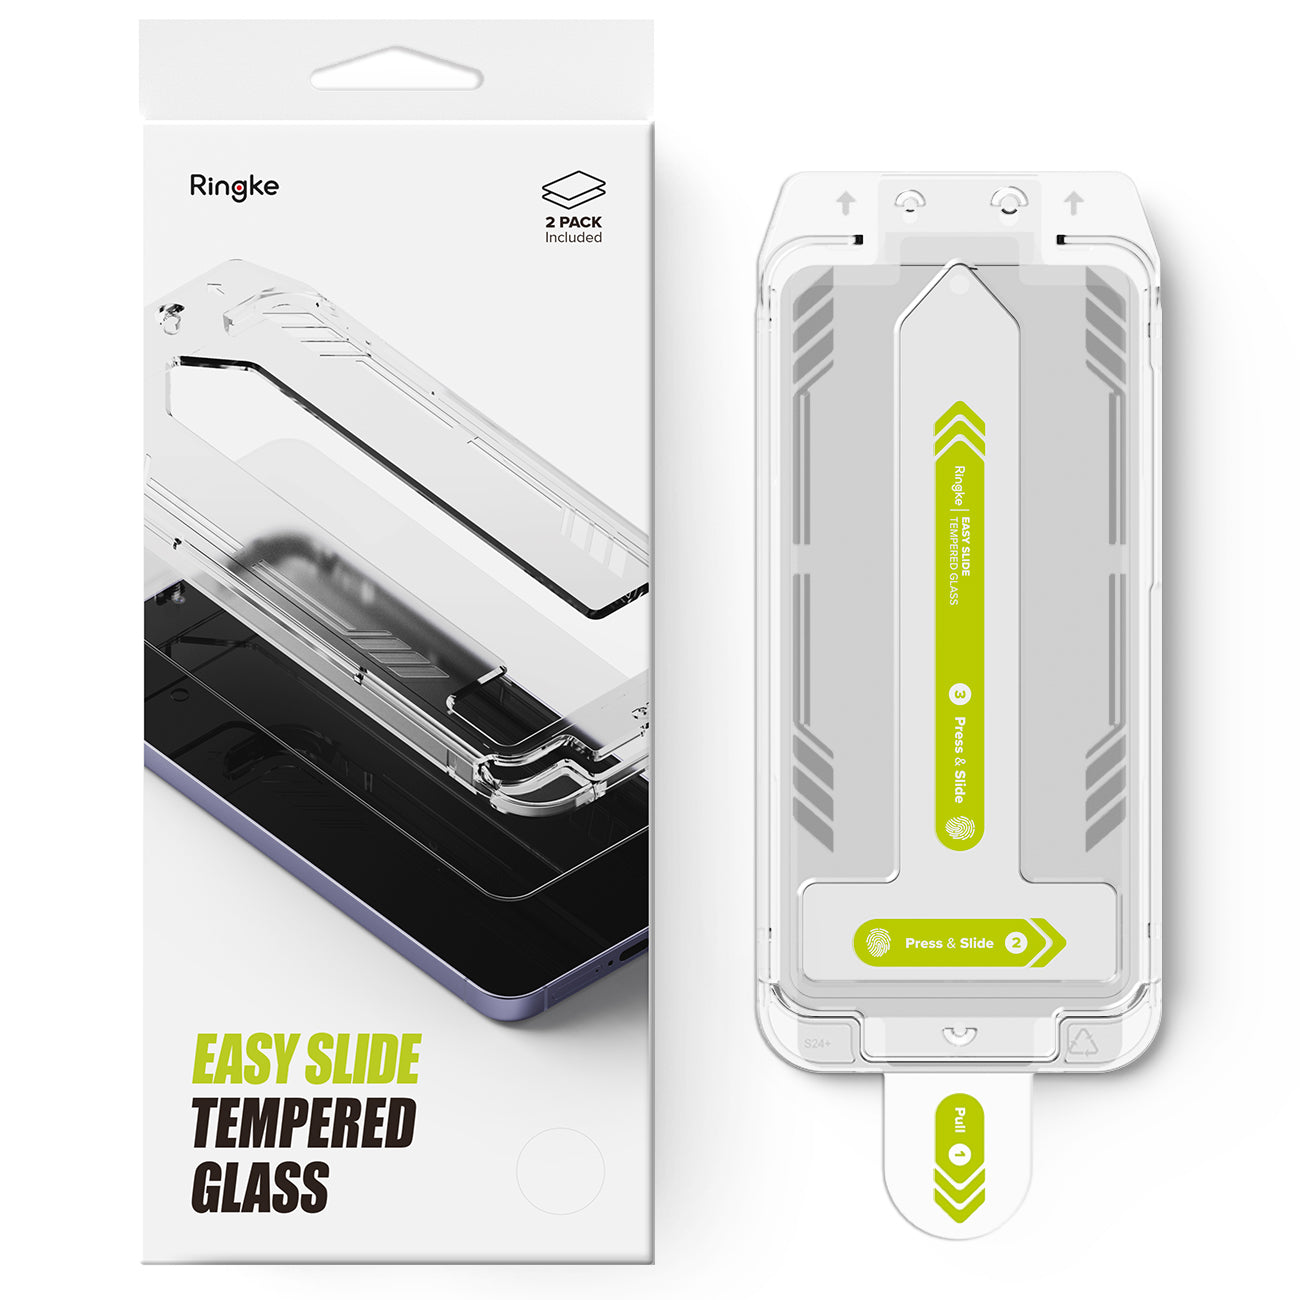 Ringke TEMPERED GLASS SCREEN PROTECTOR | Easy Slide